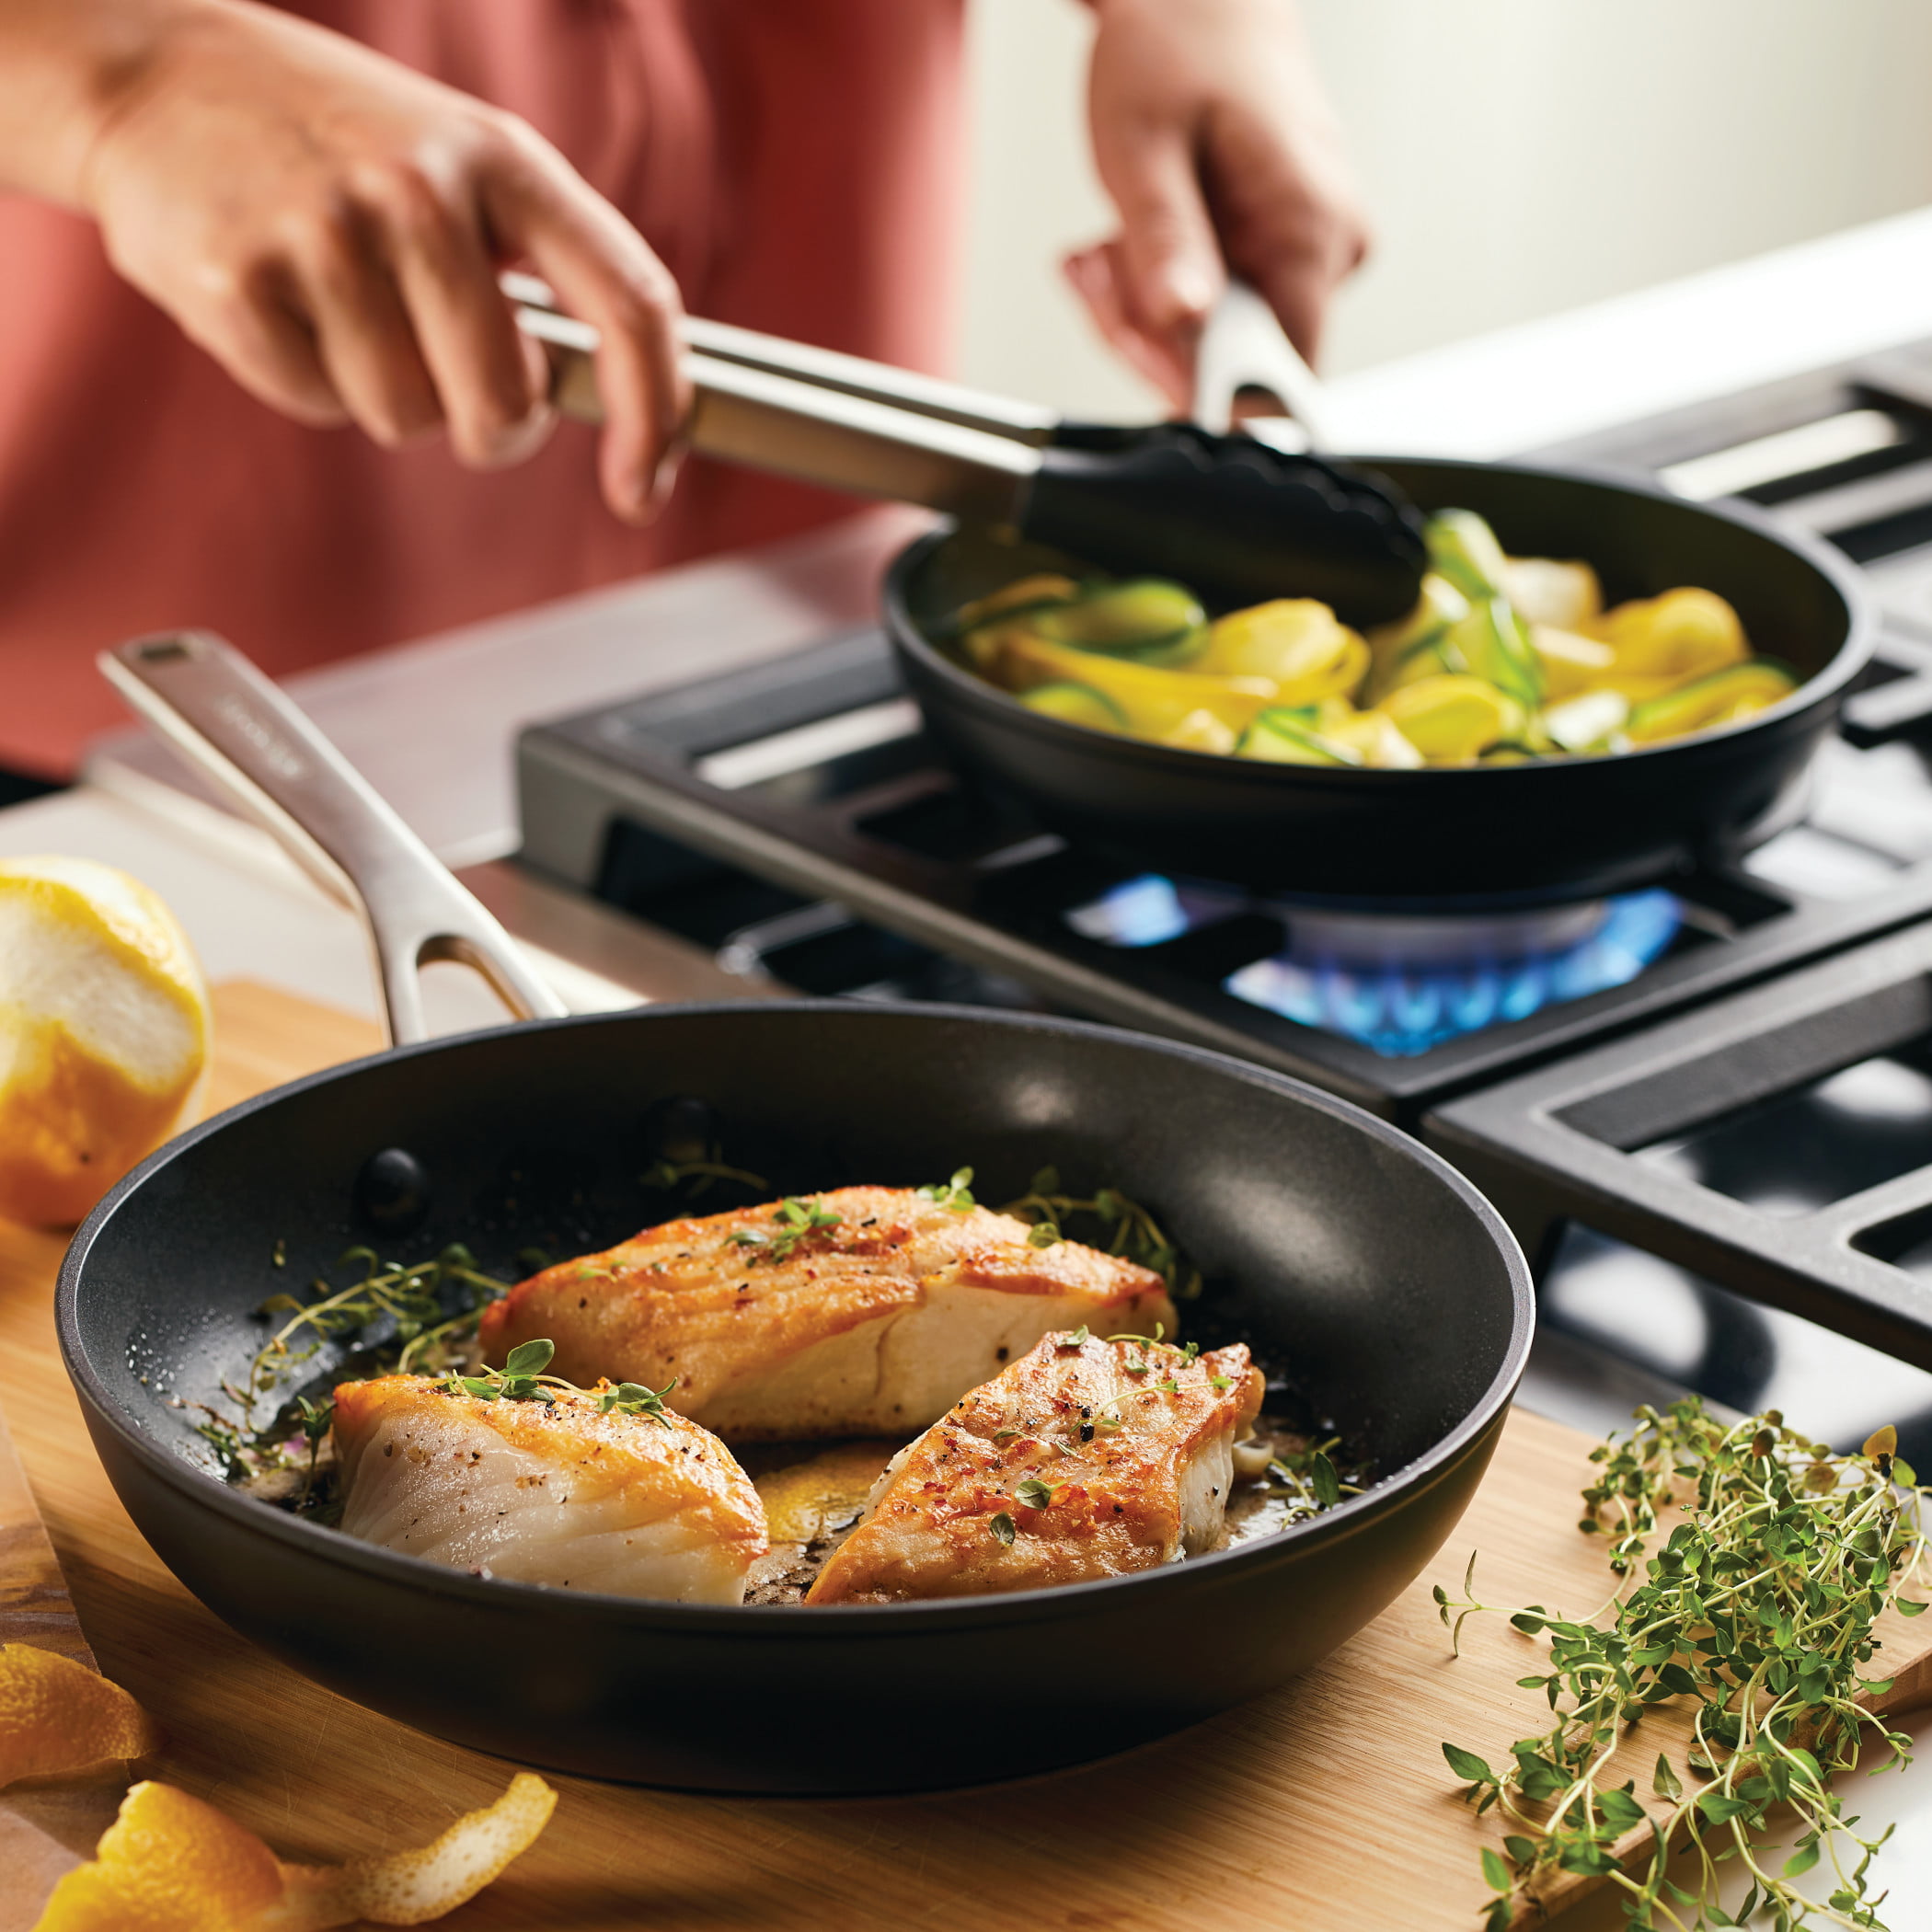 Kitchenaid 2 Piece Stainless Steel Nonstick Cookware Set & Reviews